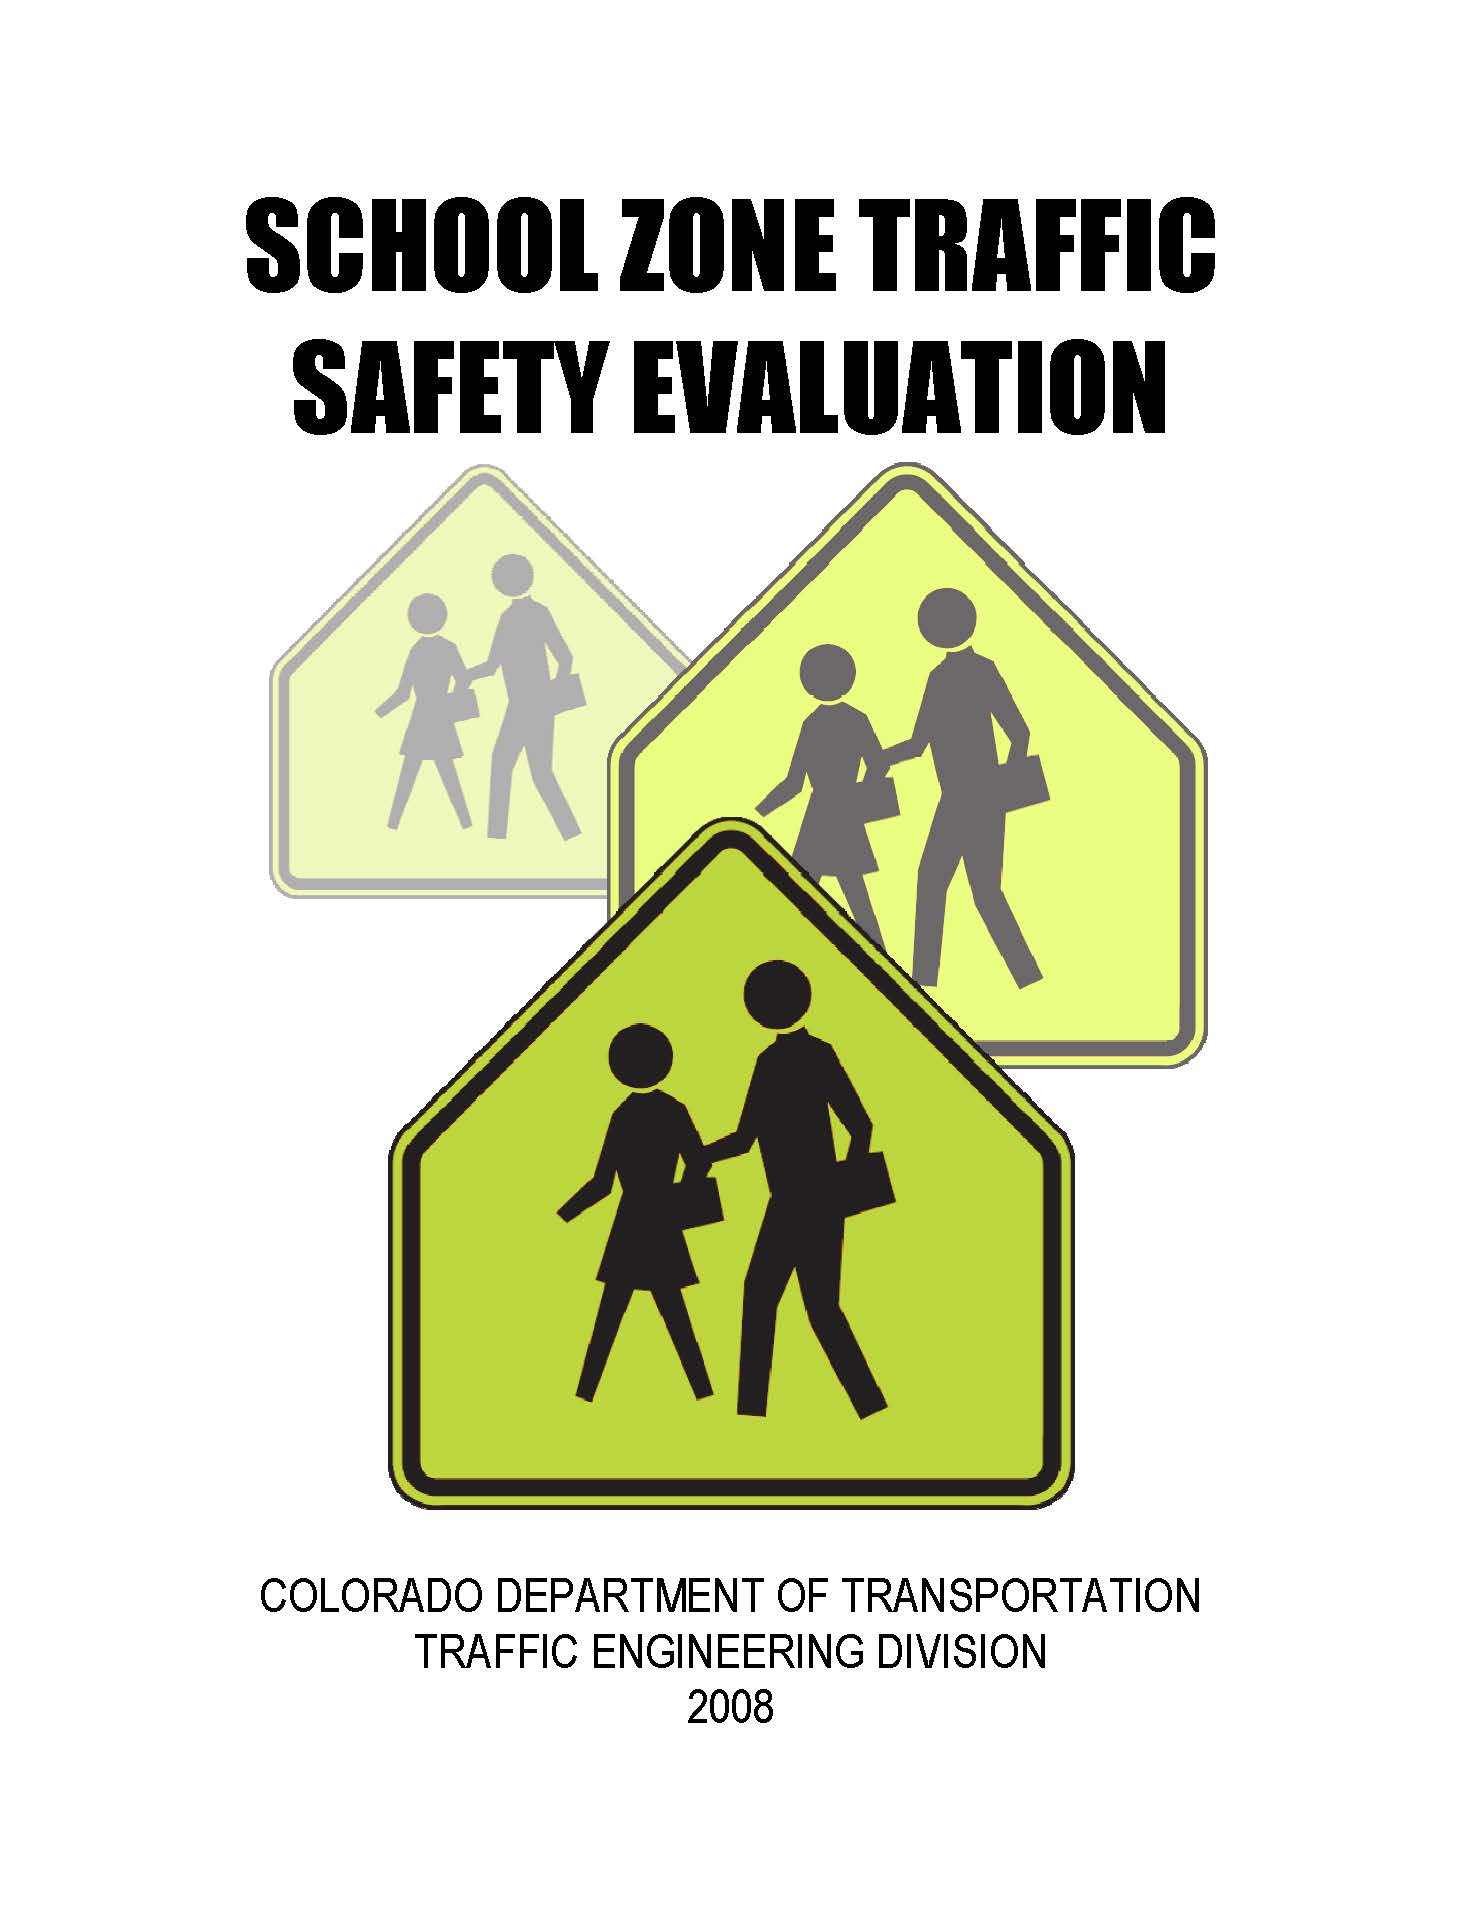 School Zone Traffic Evaluation detail image